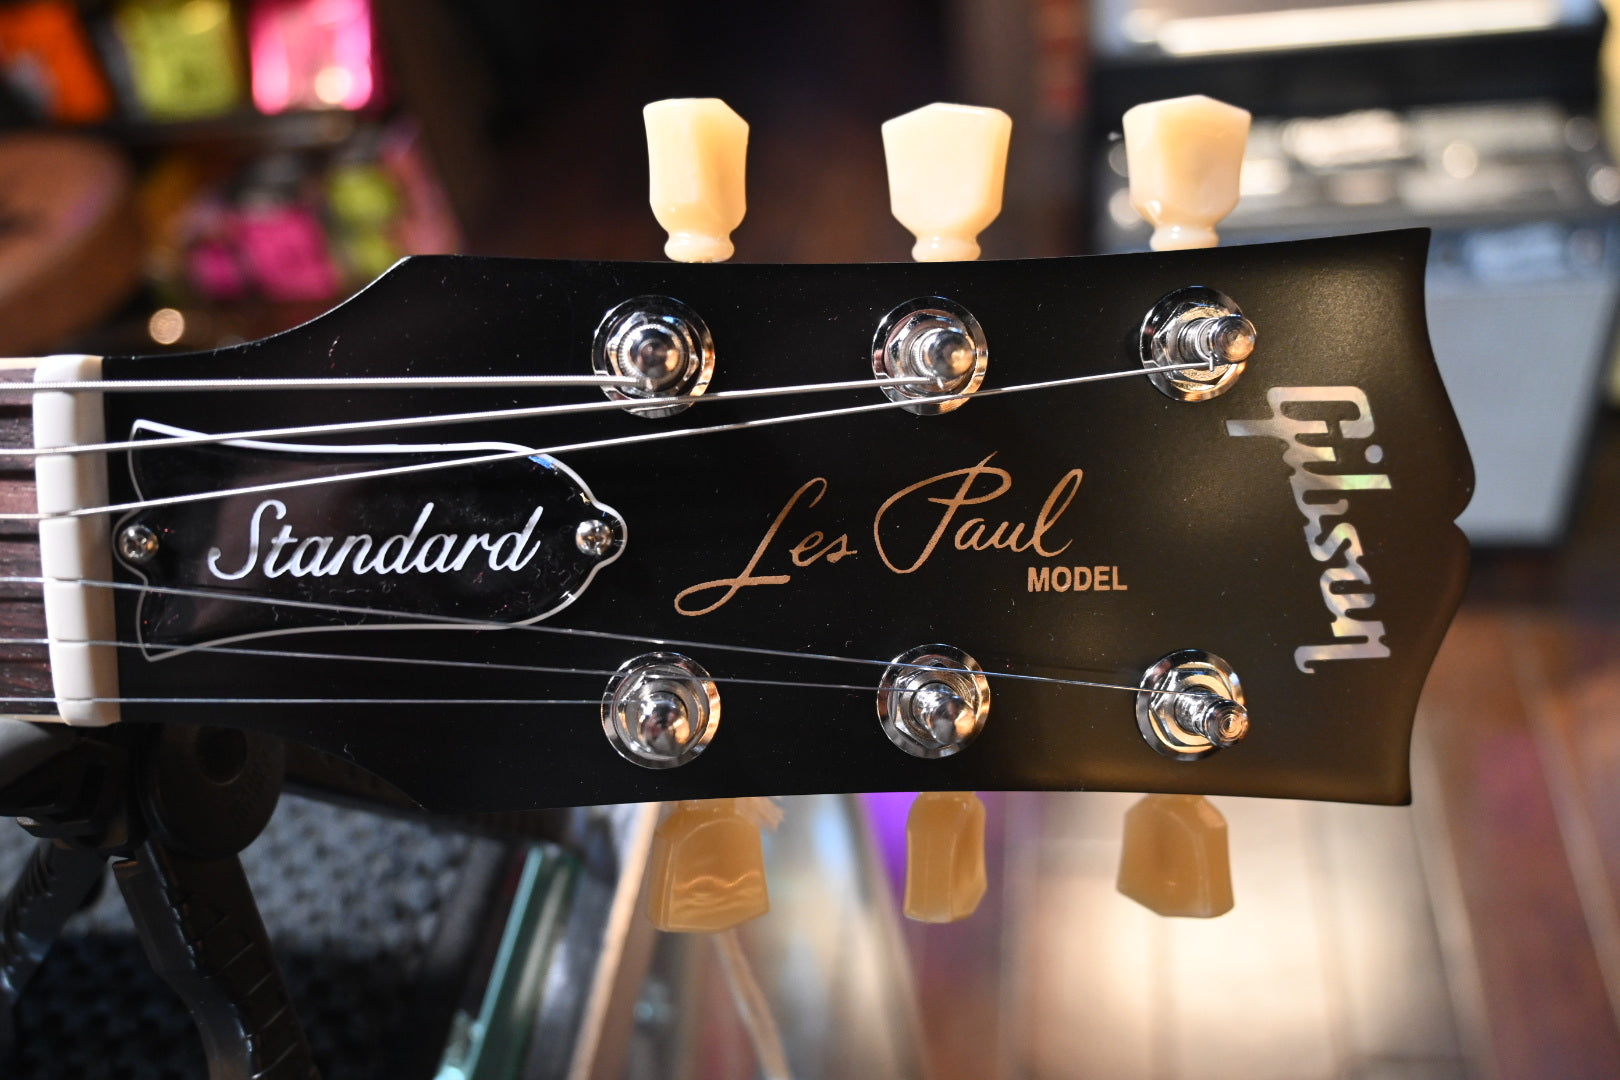 Gibson Les Paul Standard ‘50s Faded - Vintage Honey Burst Guitar #0282 - Danville Music